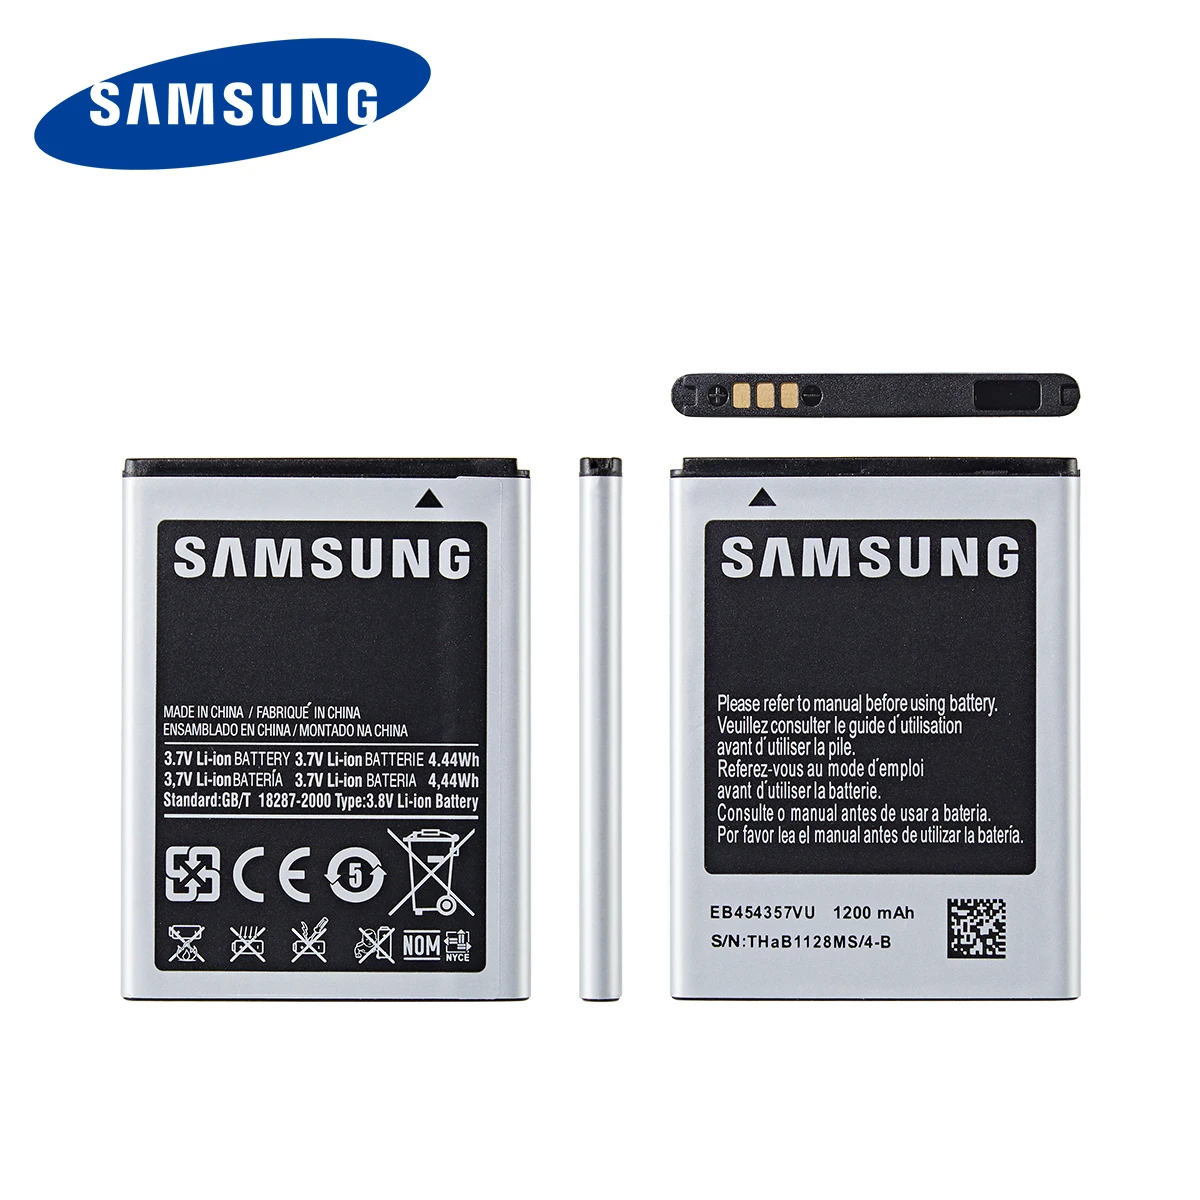 SAMSUNG Originalus EB454357VU 1200mAh Bateriją, Skirtą Samsung Galaxy Y S5360 Y Pro B5510 Wave S5380 S5368 Pocket S5300 Chat B5330 1